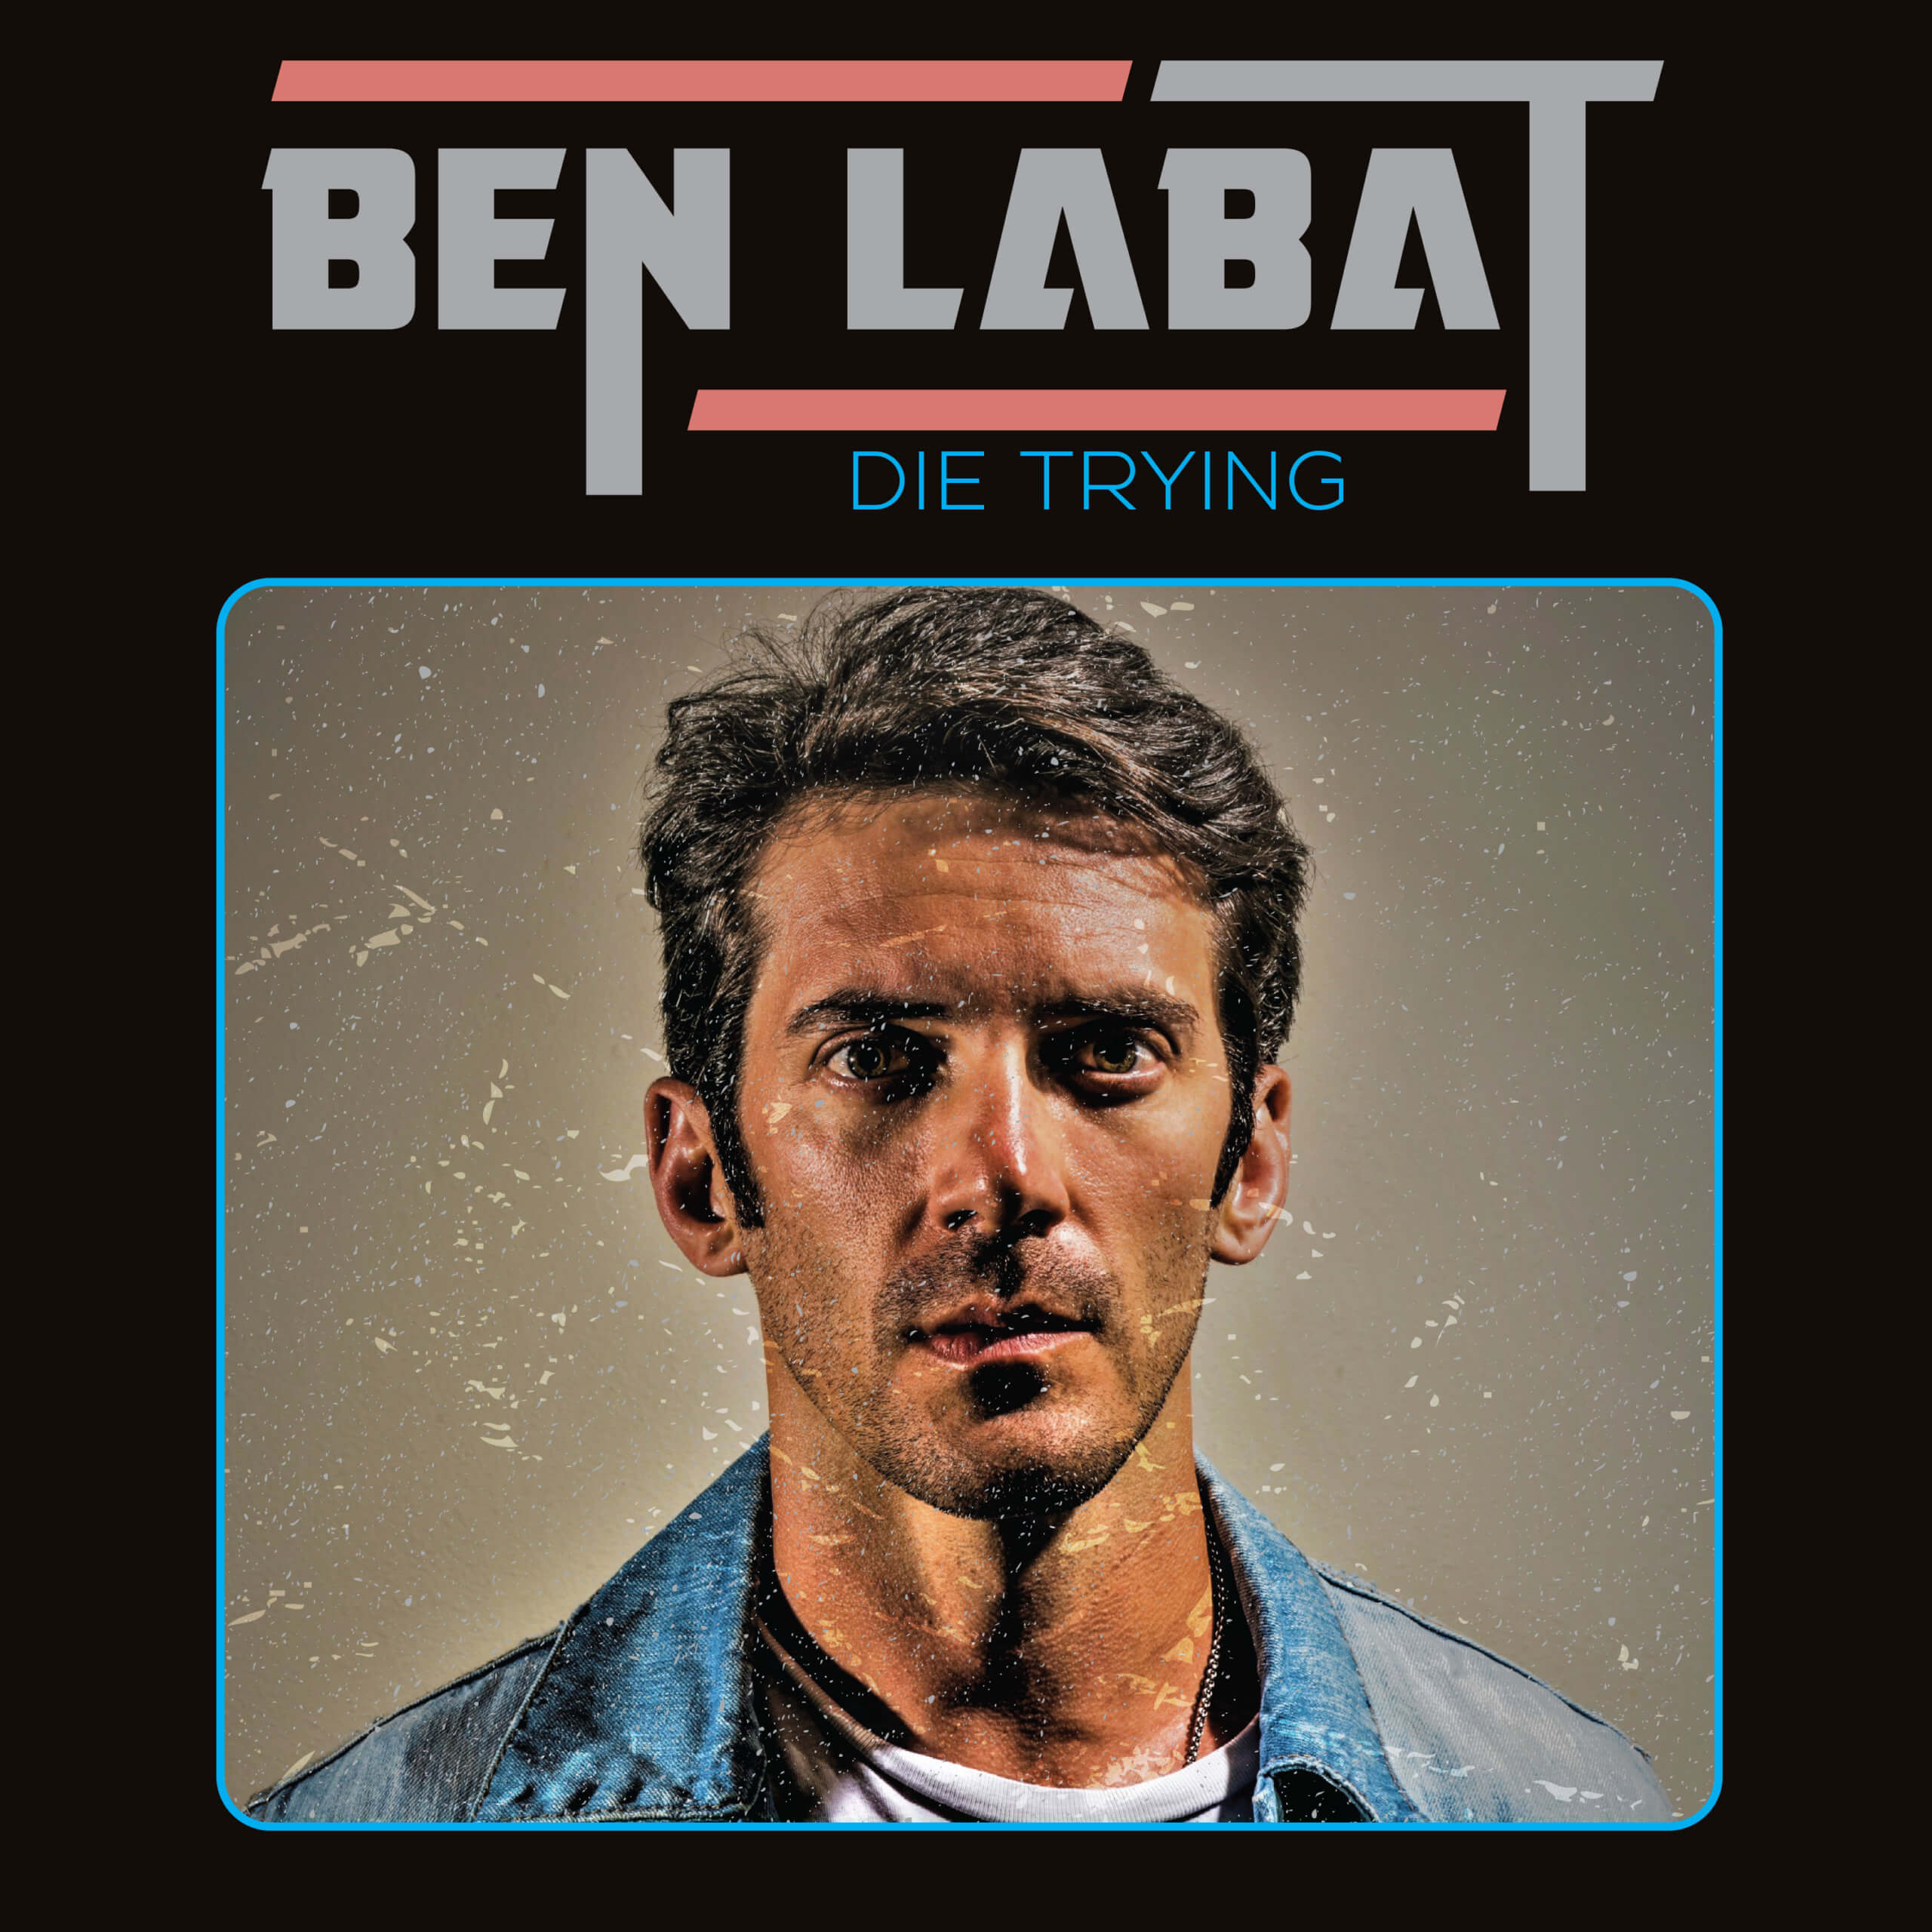 EXCLUSIVE PREMIERE: “Die Trying” by Ben Labat